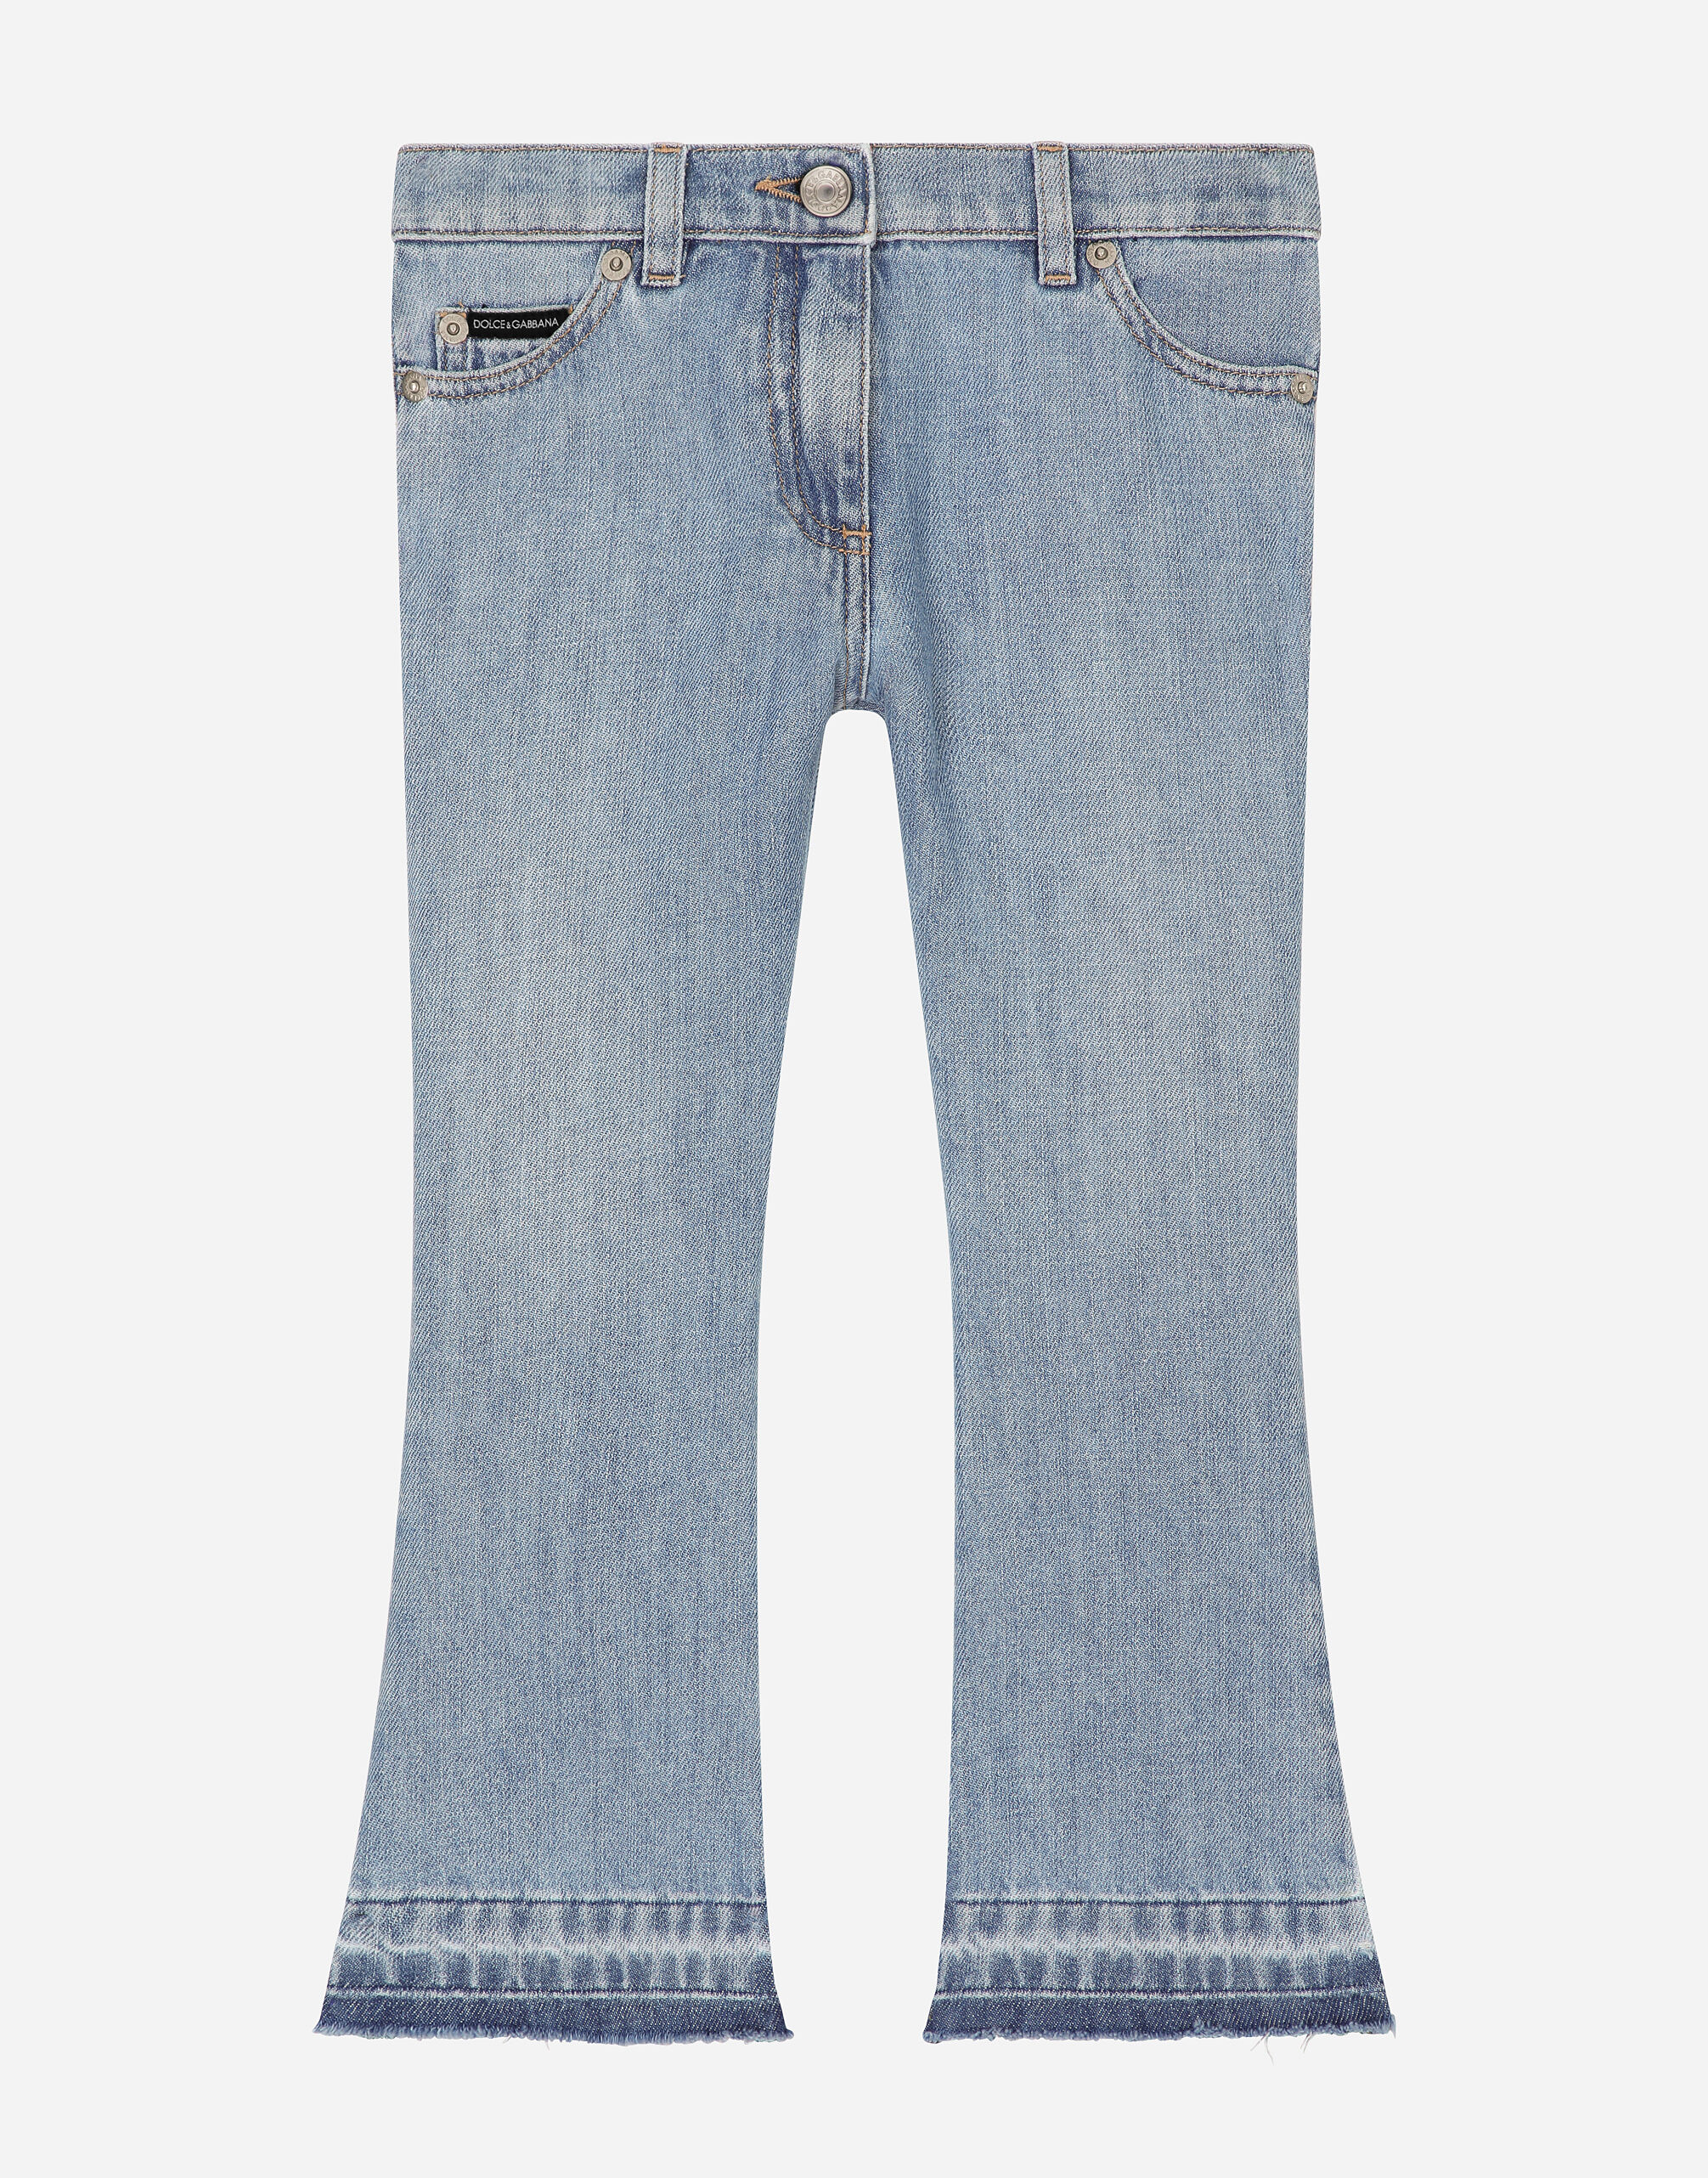 ${brand} 5-pocket denim jeans with branded tag ${colorDescription} ${masterID}